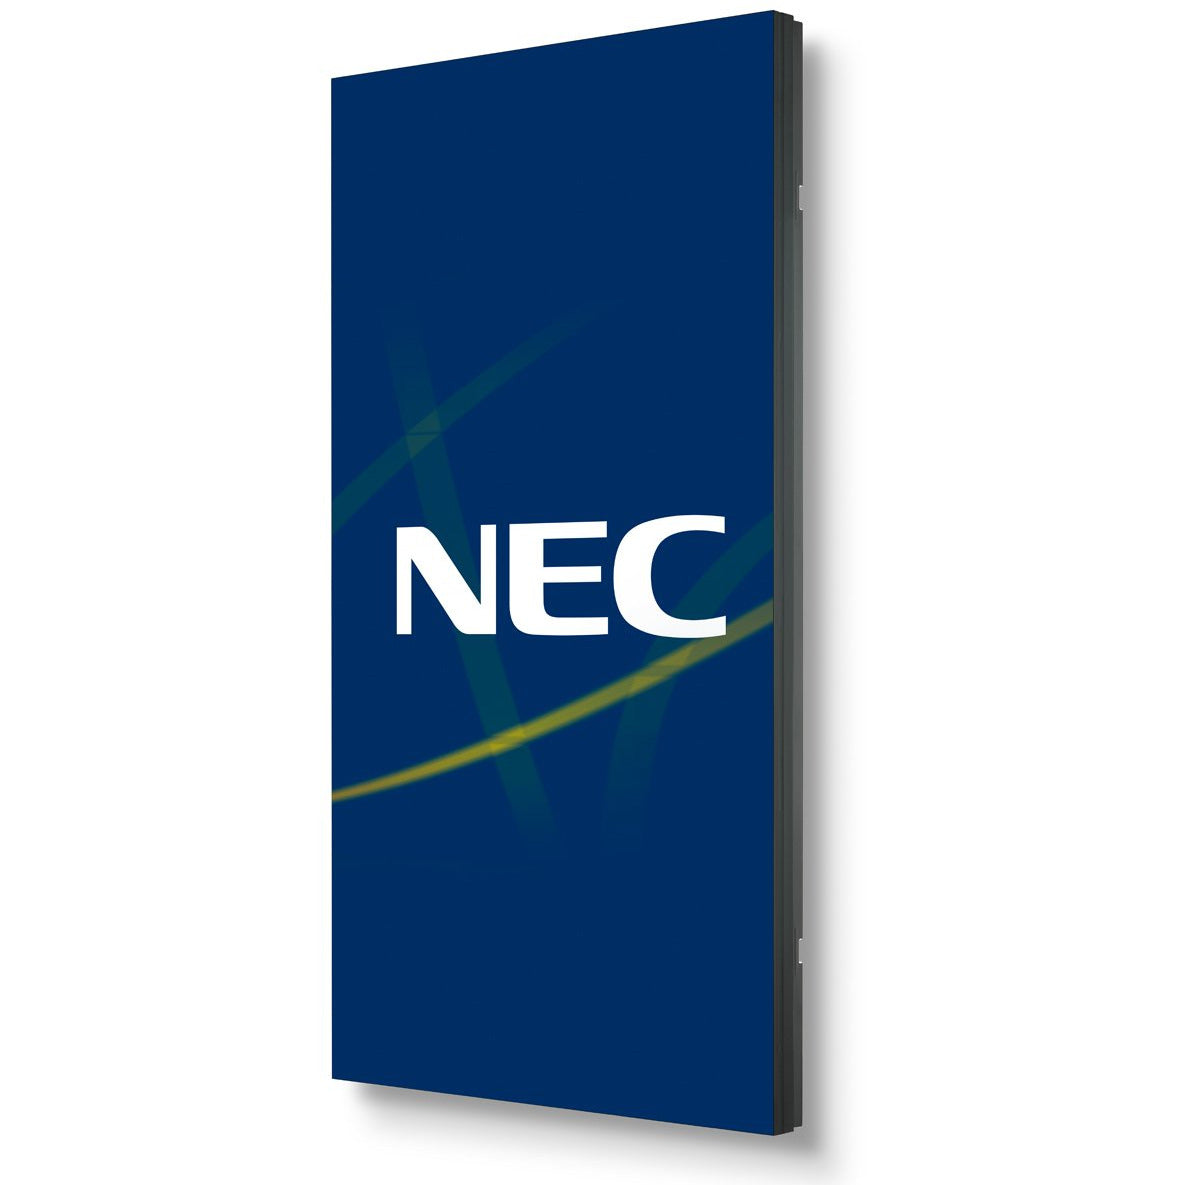 NEC MultiSync® UN552VS LCD 55" Video Wall Display